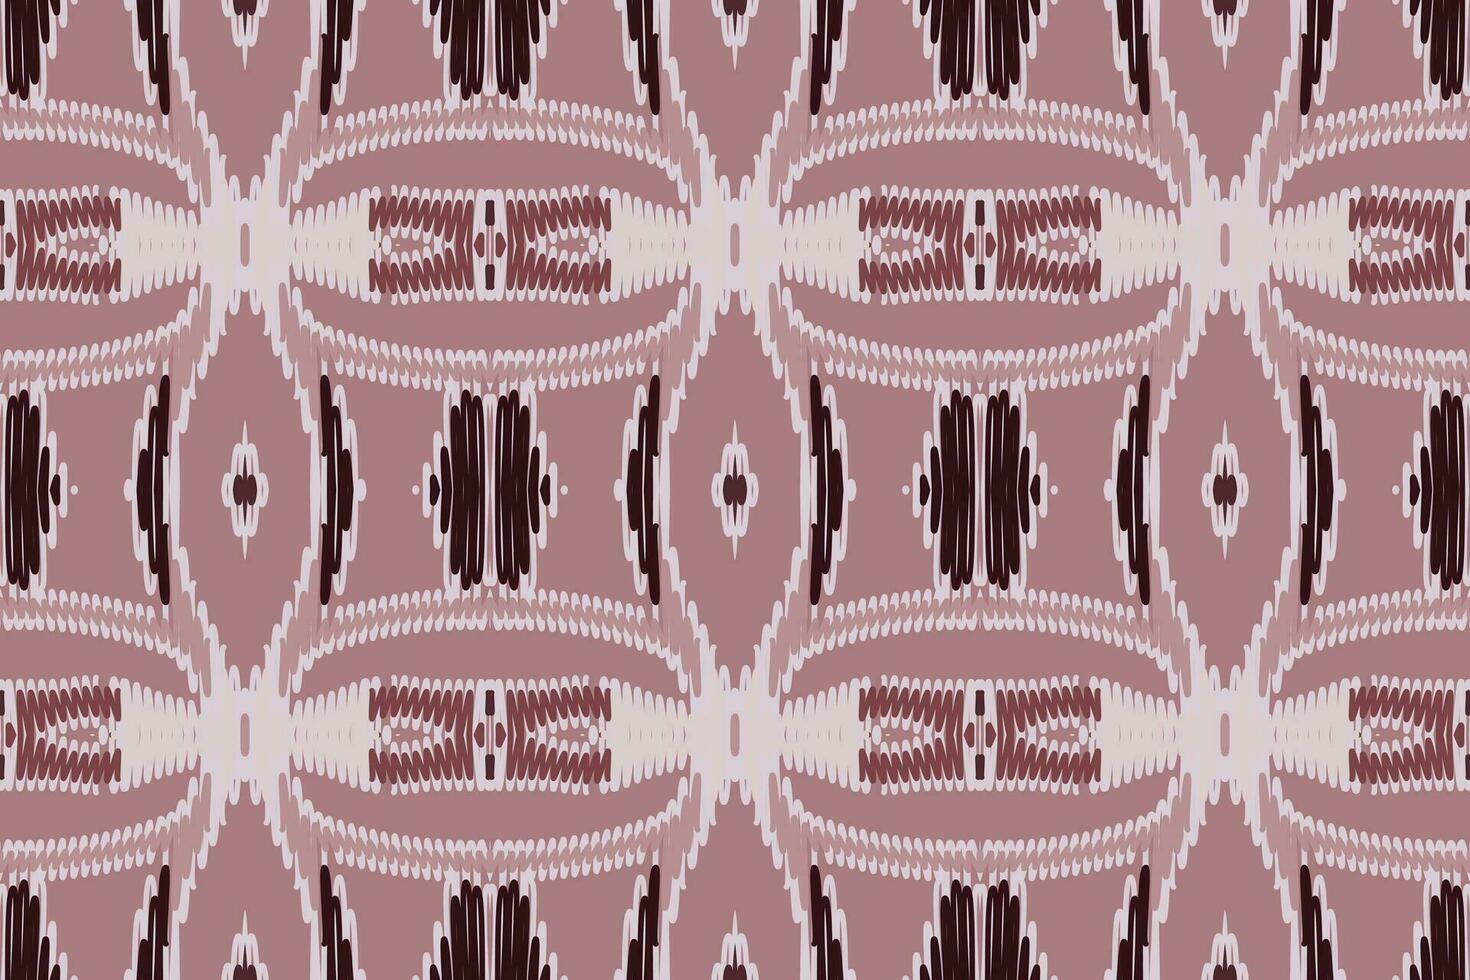 stropdas kleurstof patroon naadloos mughal architectuur motief borduurwerk, ikat borduurwerk vector ontwerp voor afdrukken jacquard Slavisch patroon folklore patroon kente arabesk